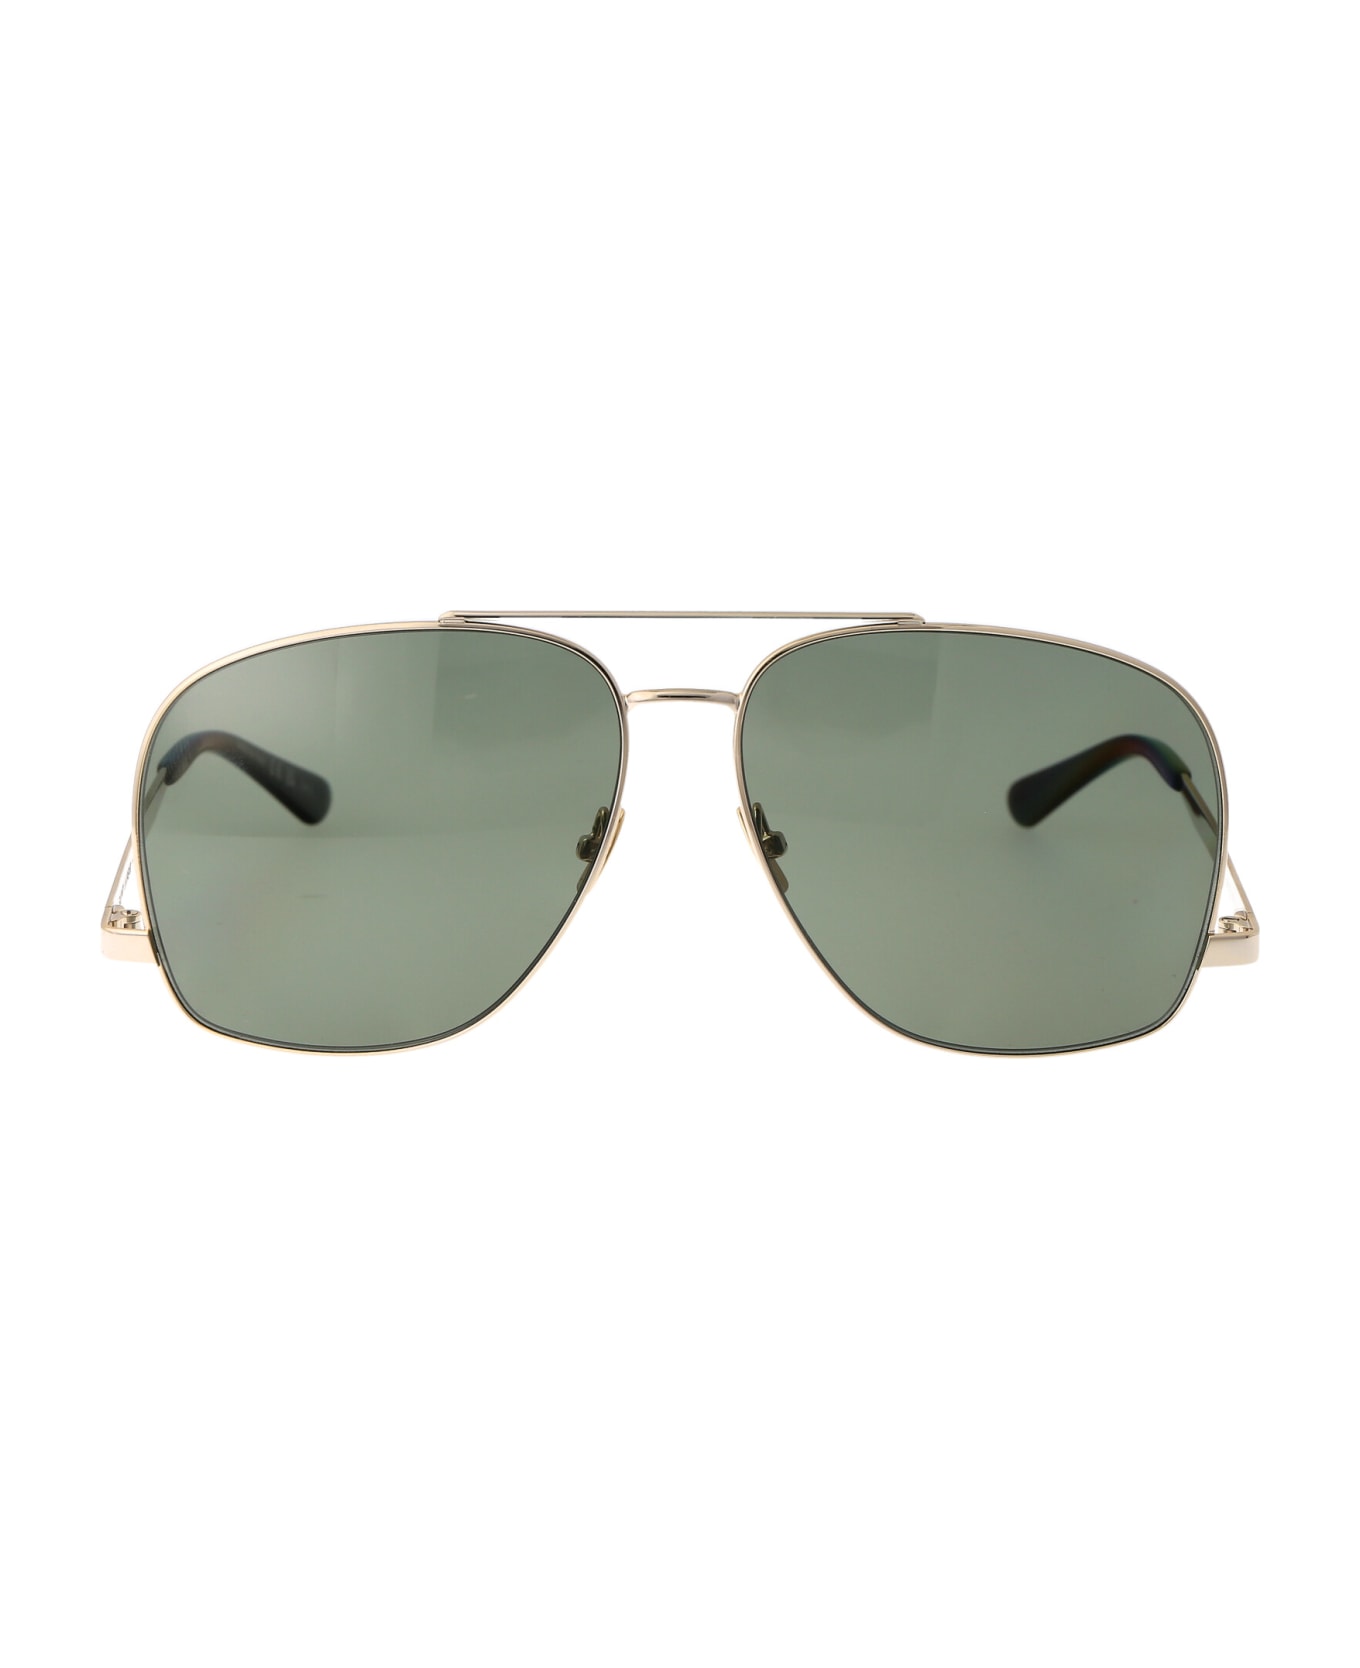 Saint Laurent Eyewear Sl 653 Leon Sunglasses - 003 GOLD GOLD GREEN サングラス